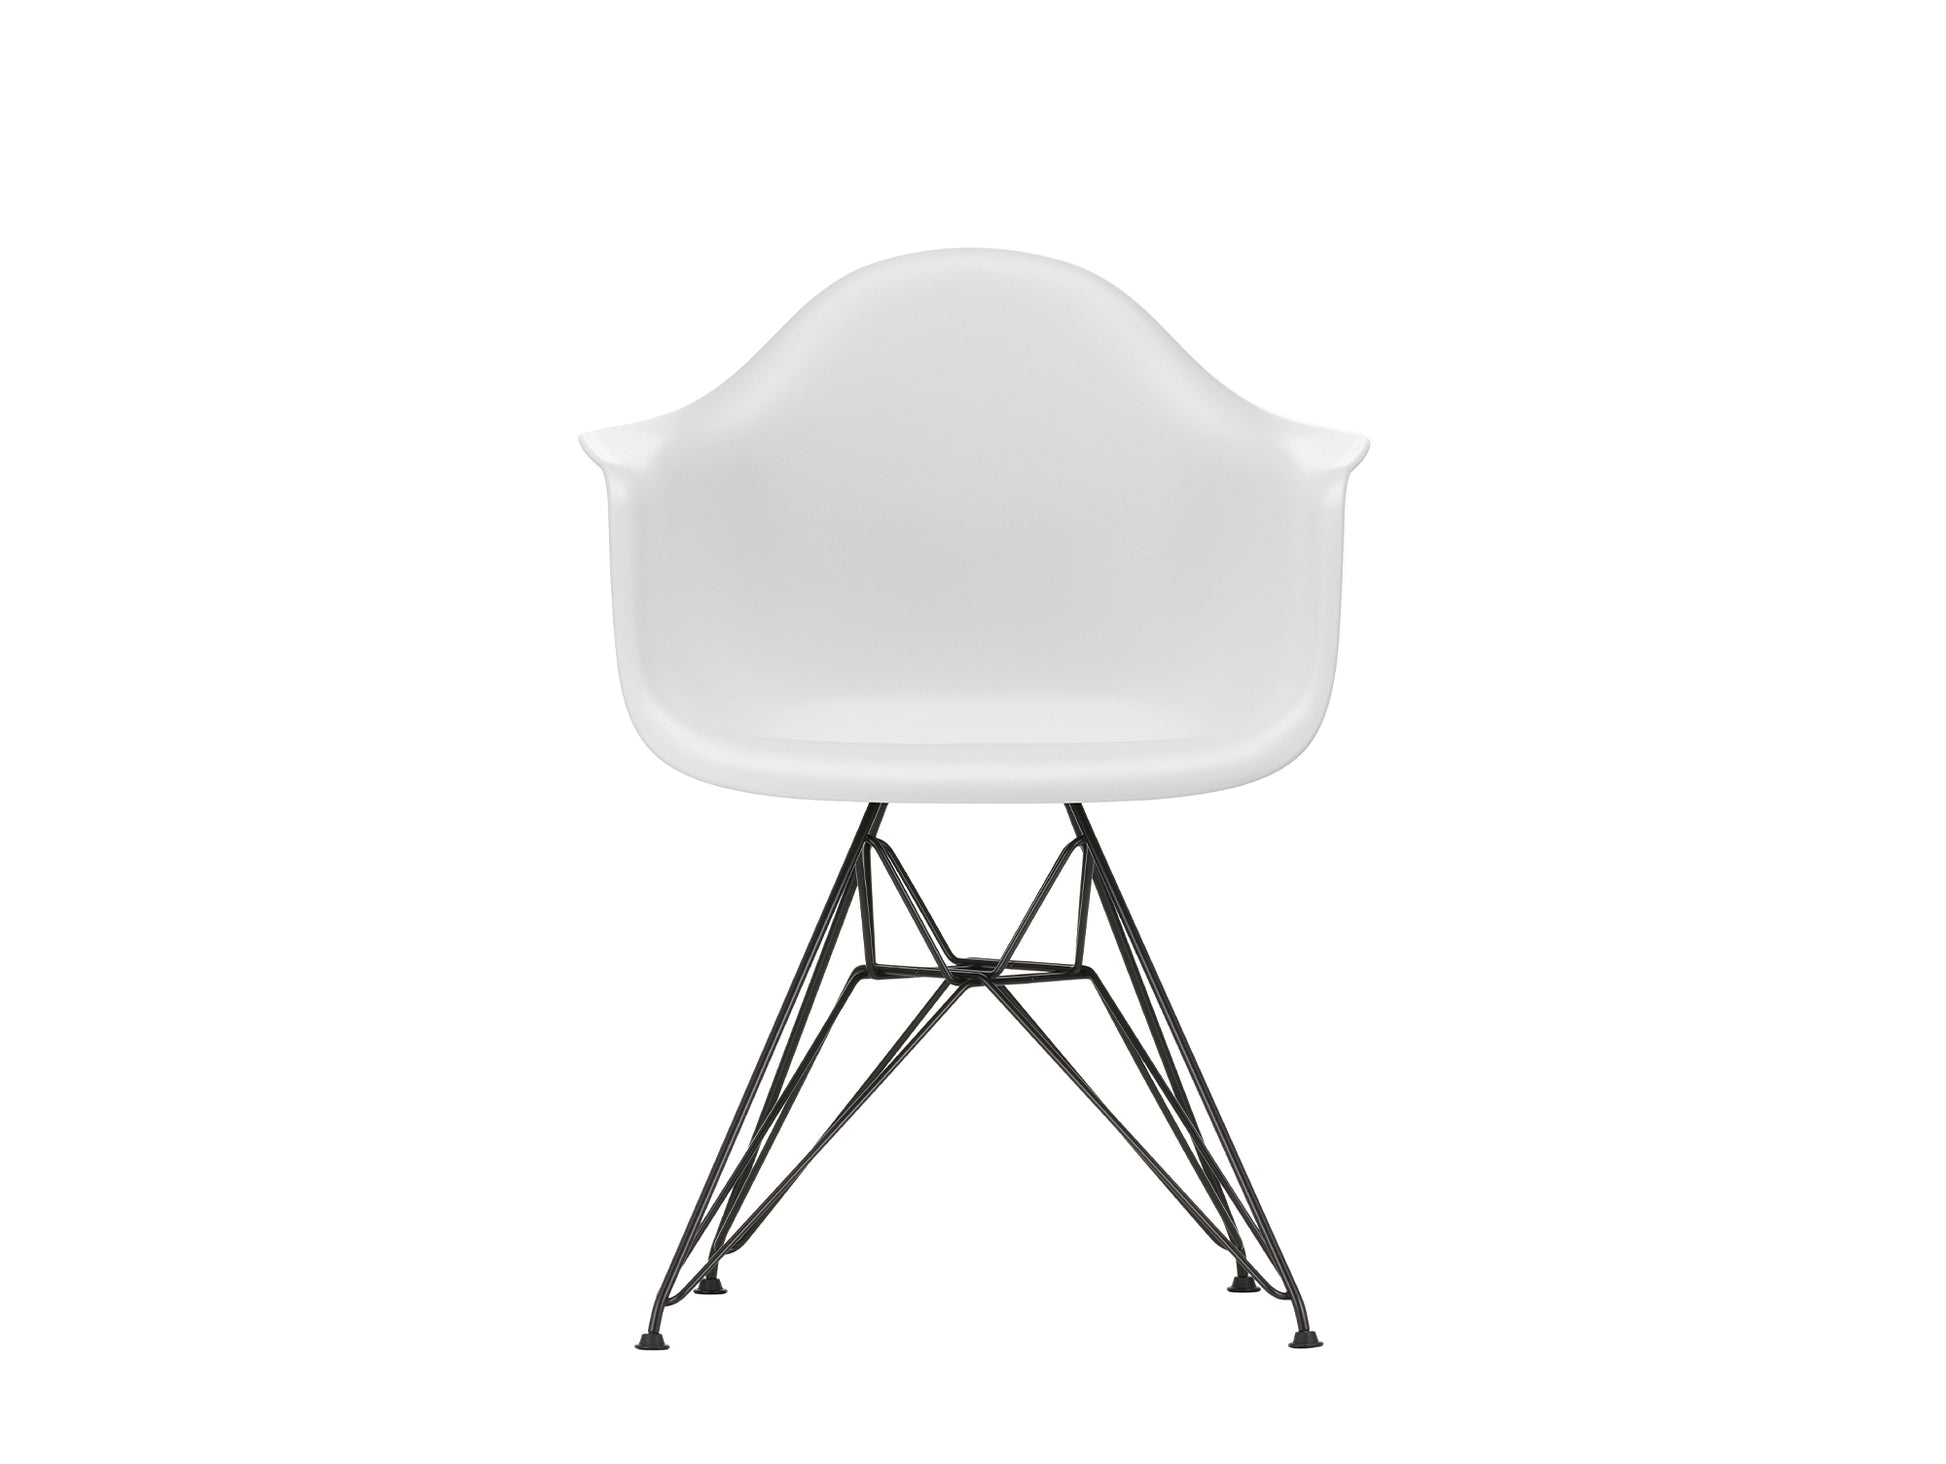 Eames DAR Plastic Armchair RE by Vitra - 85 Cotton White Shell / Basic Dark Base